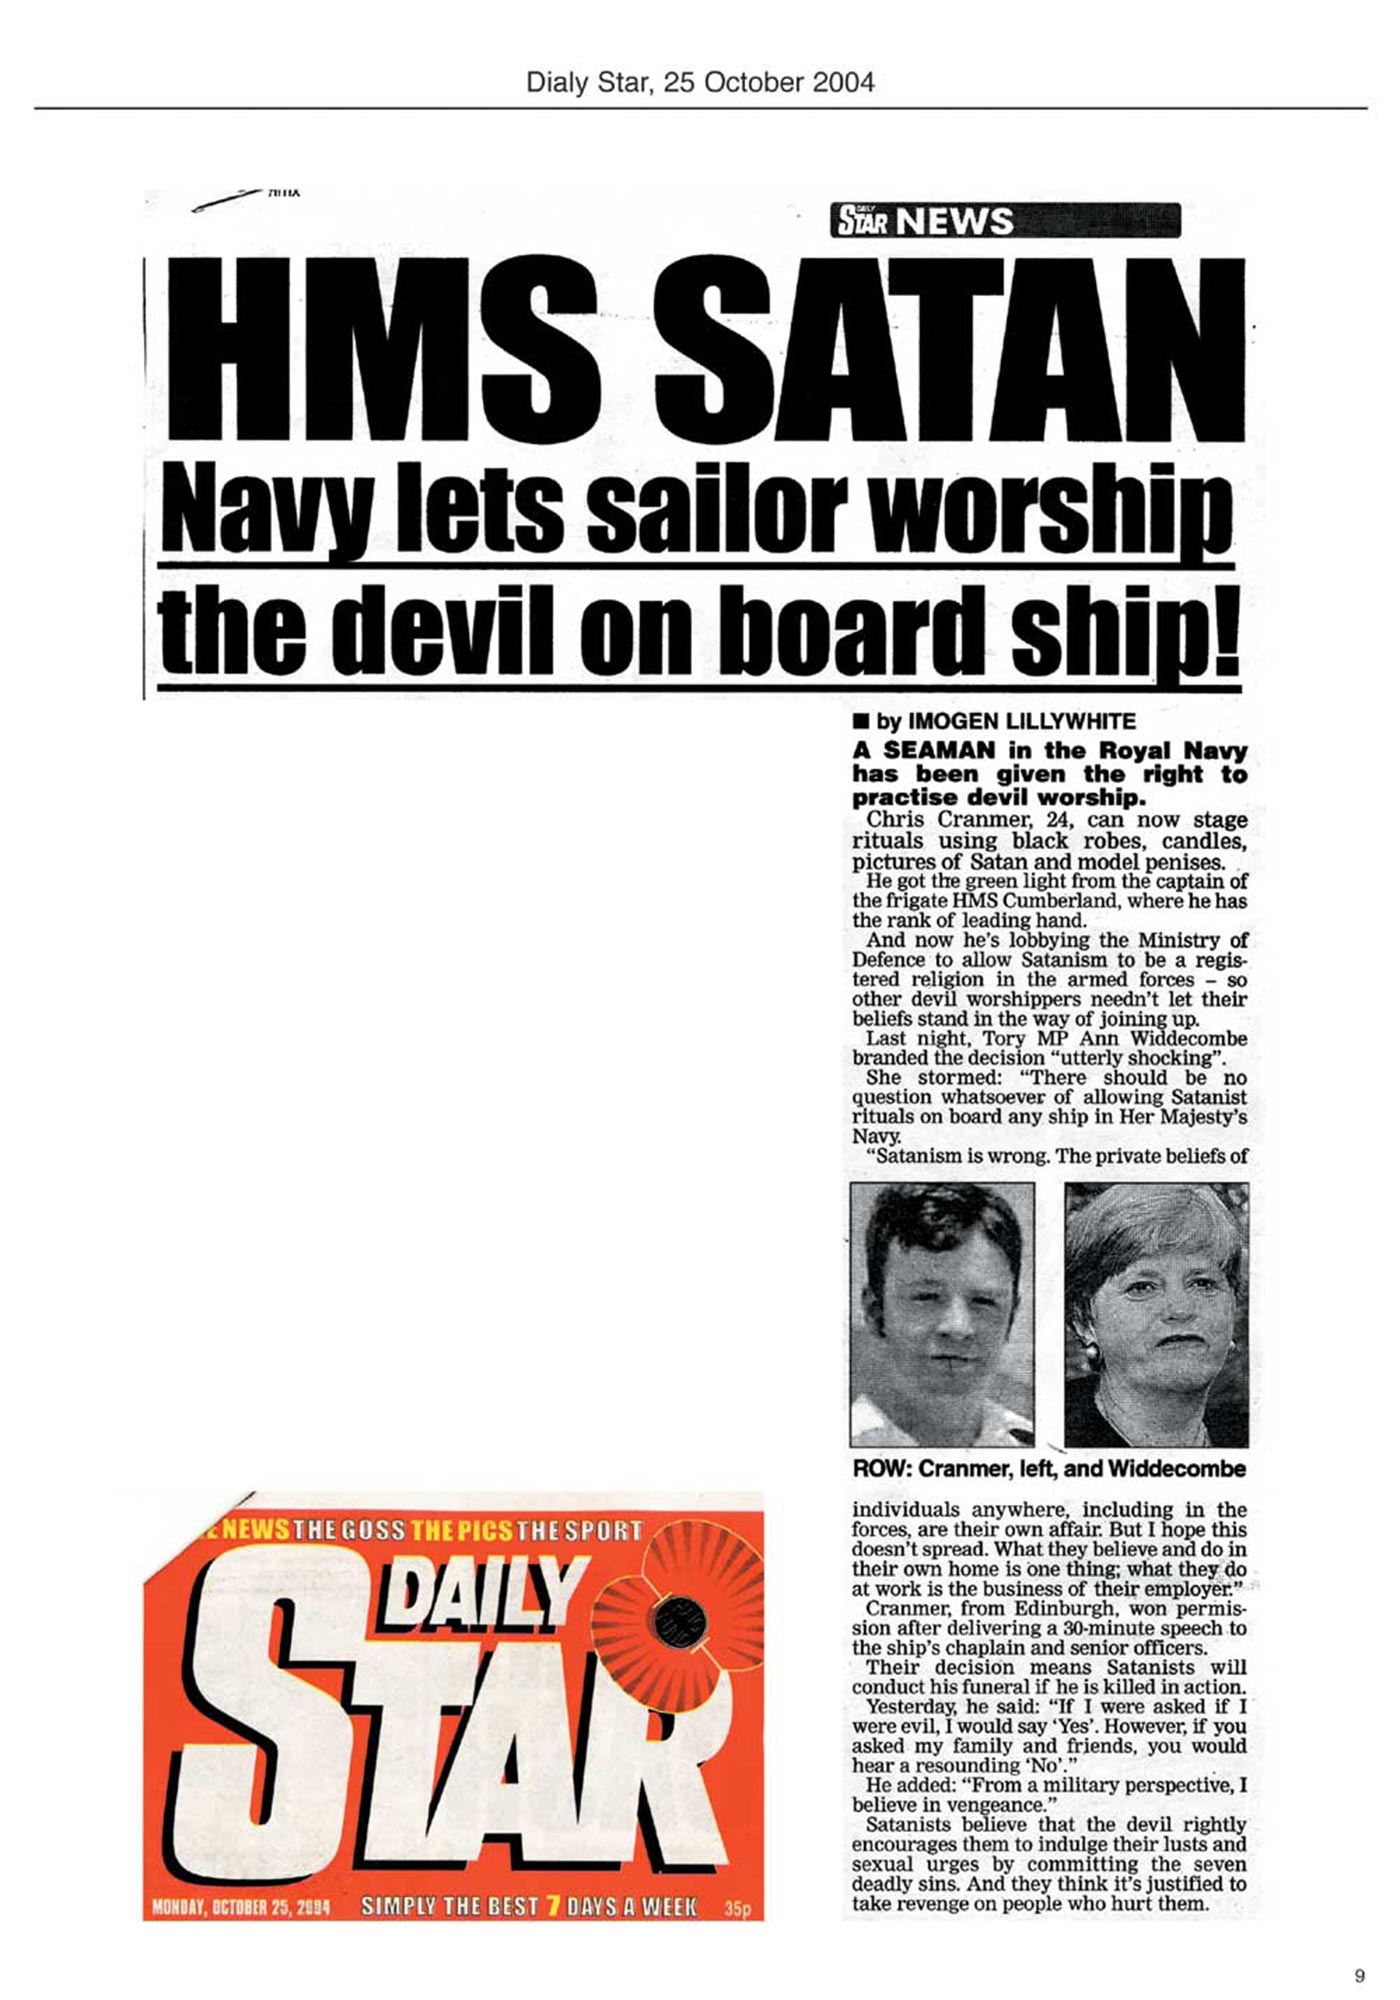 Daily Star October 2004